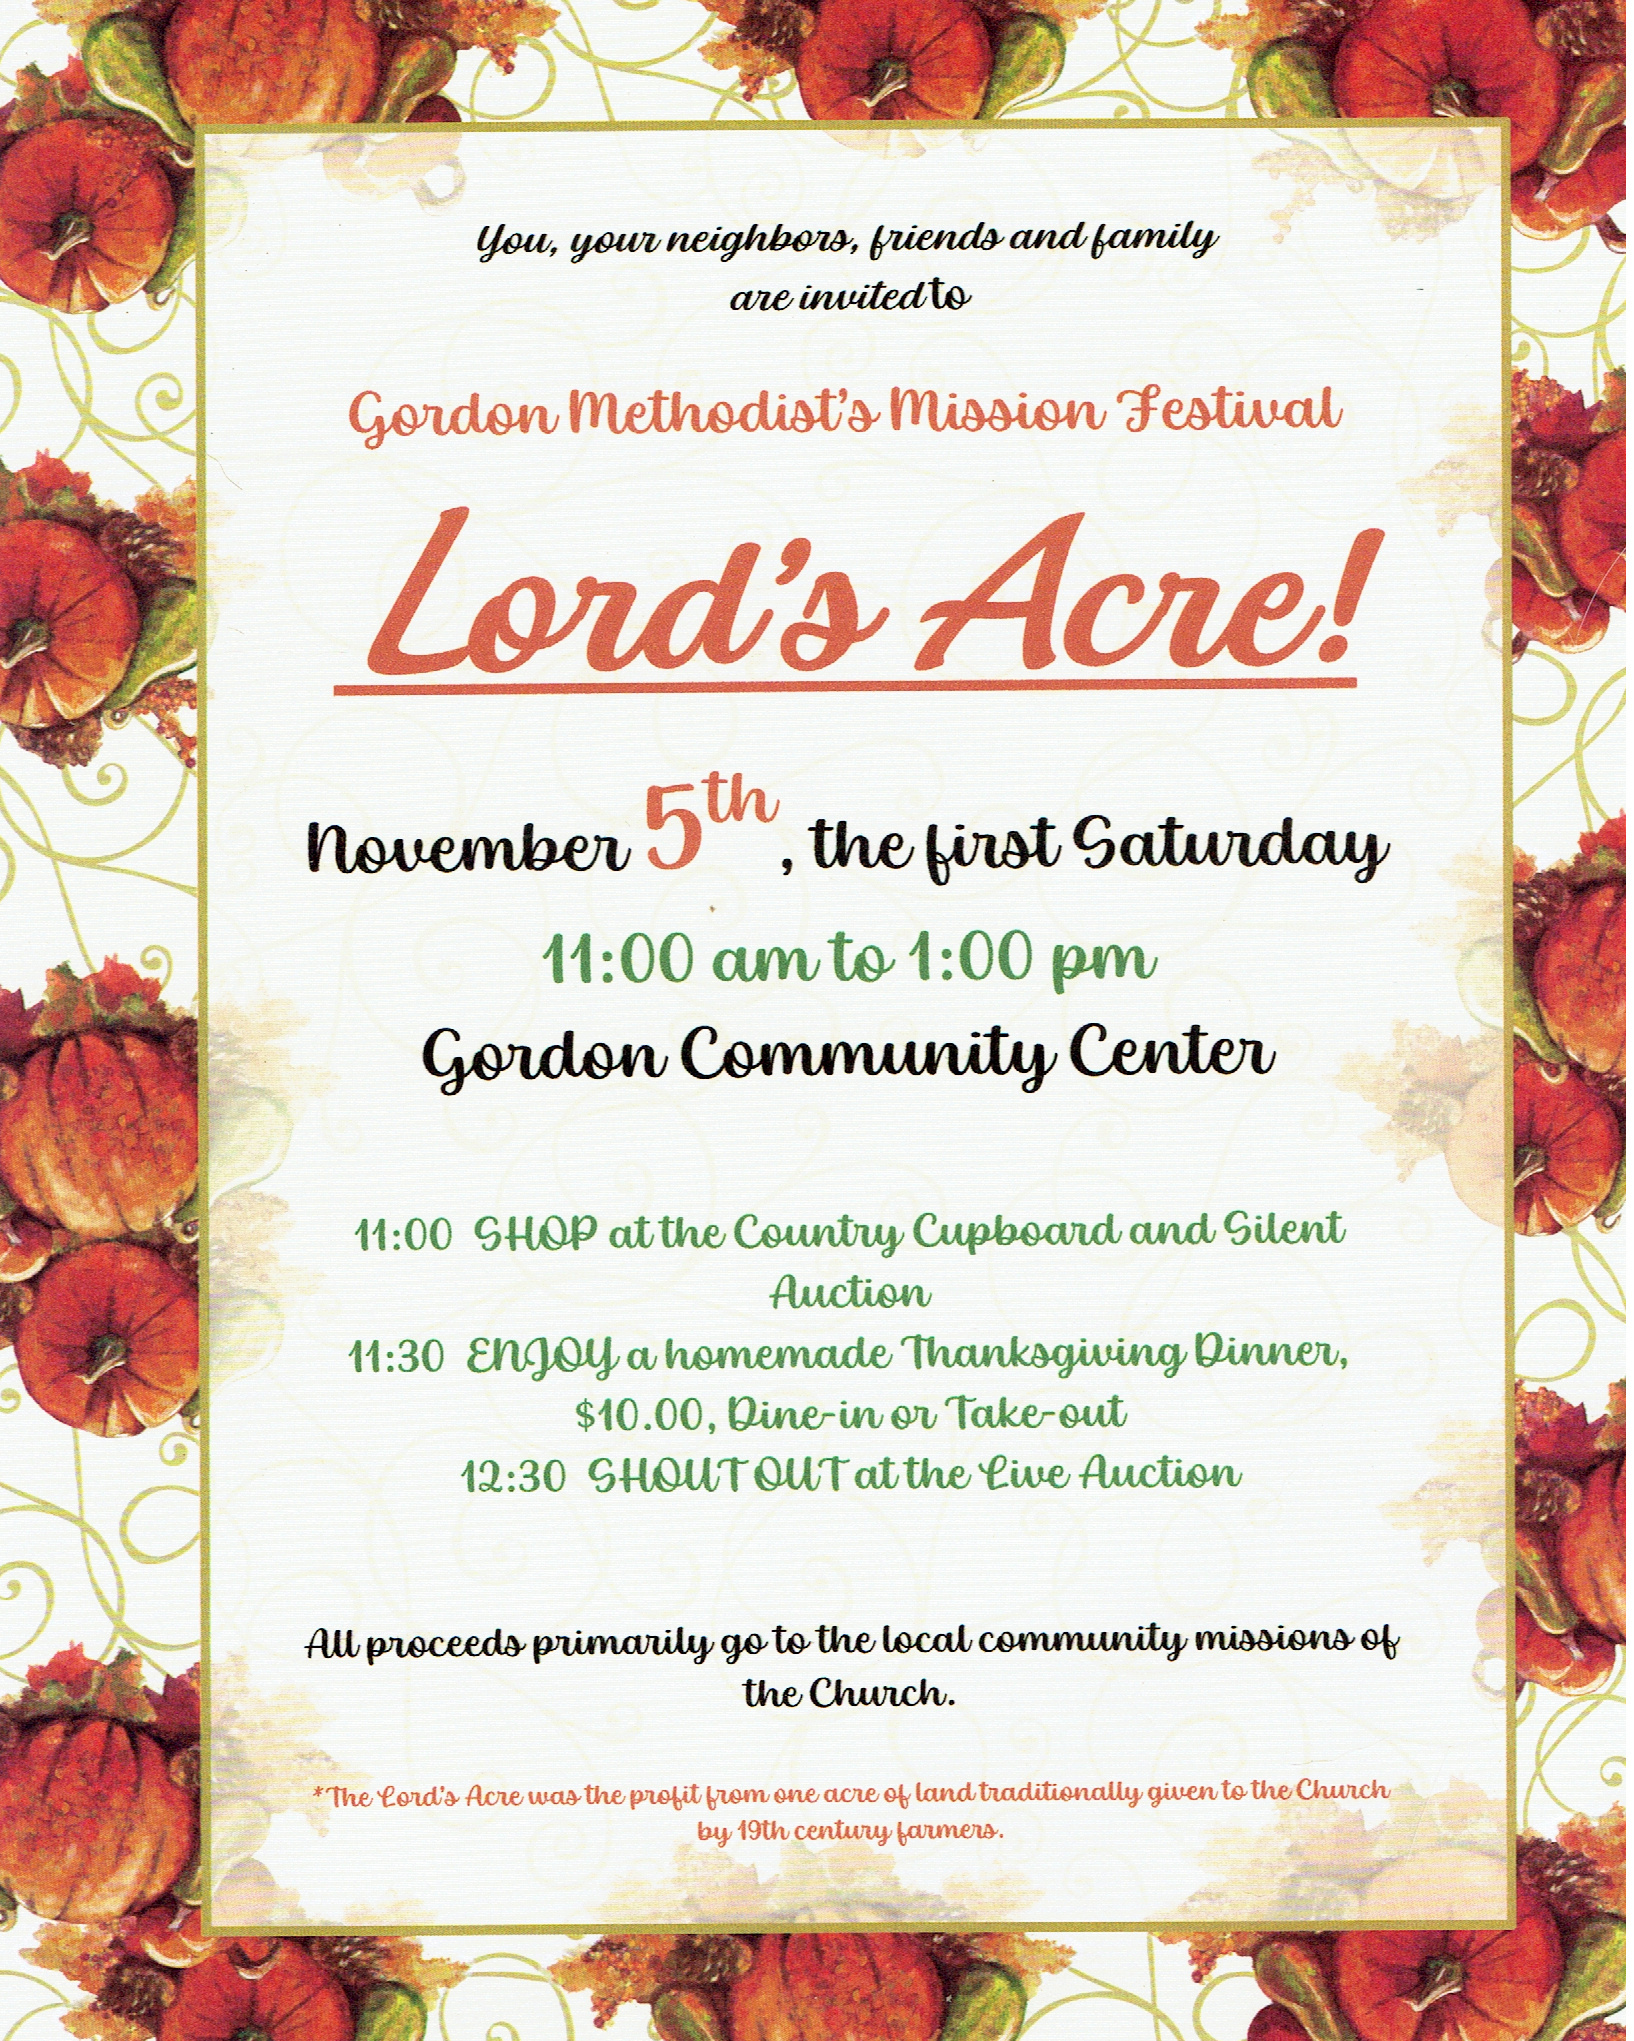 Gordon Methodist's Lord's Acre, November 5th Microplex News